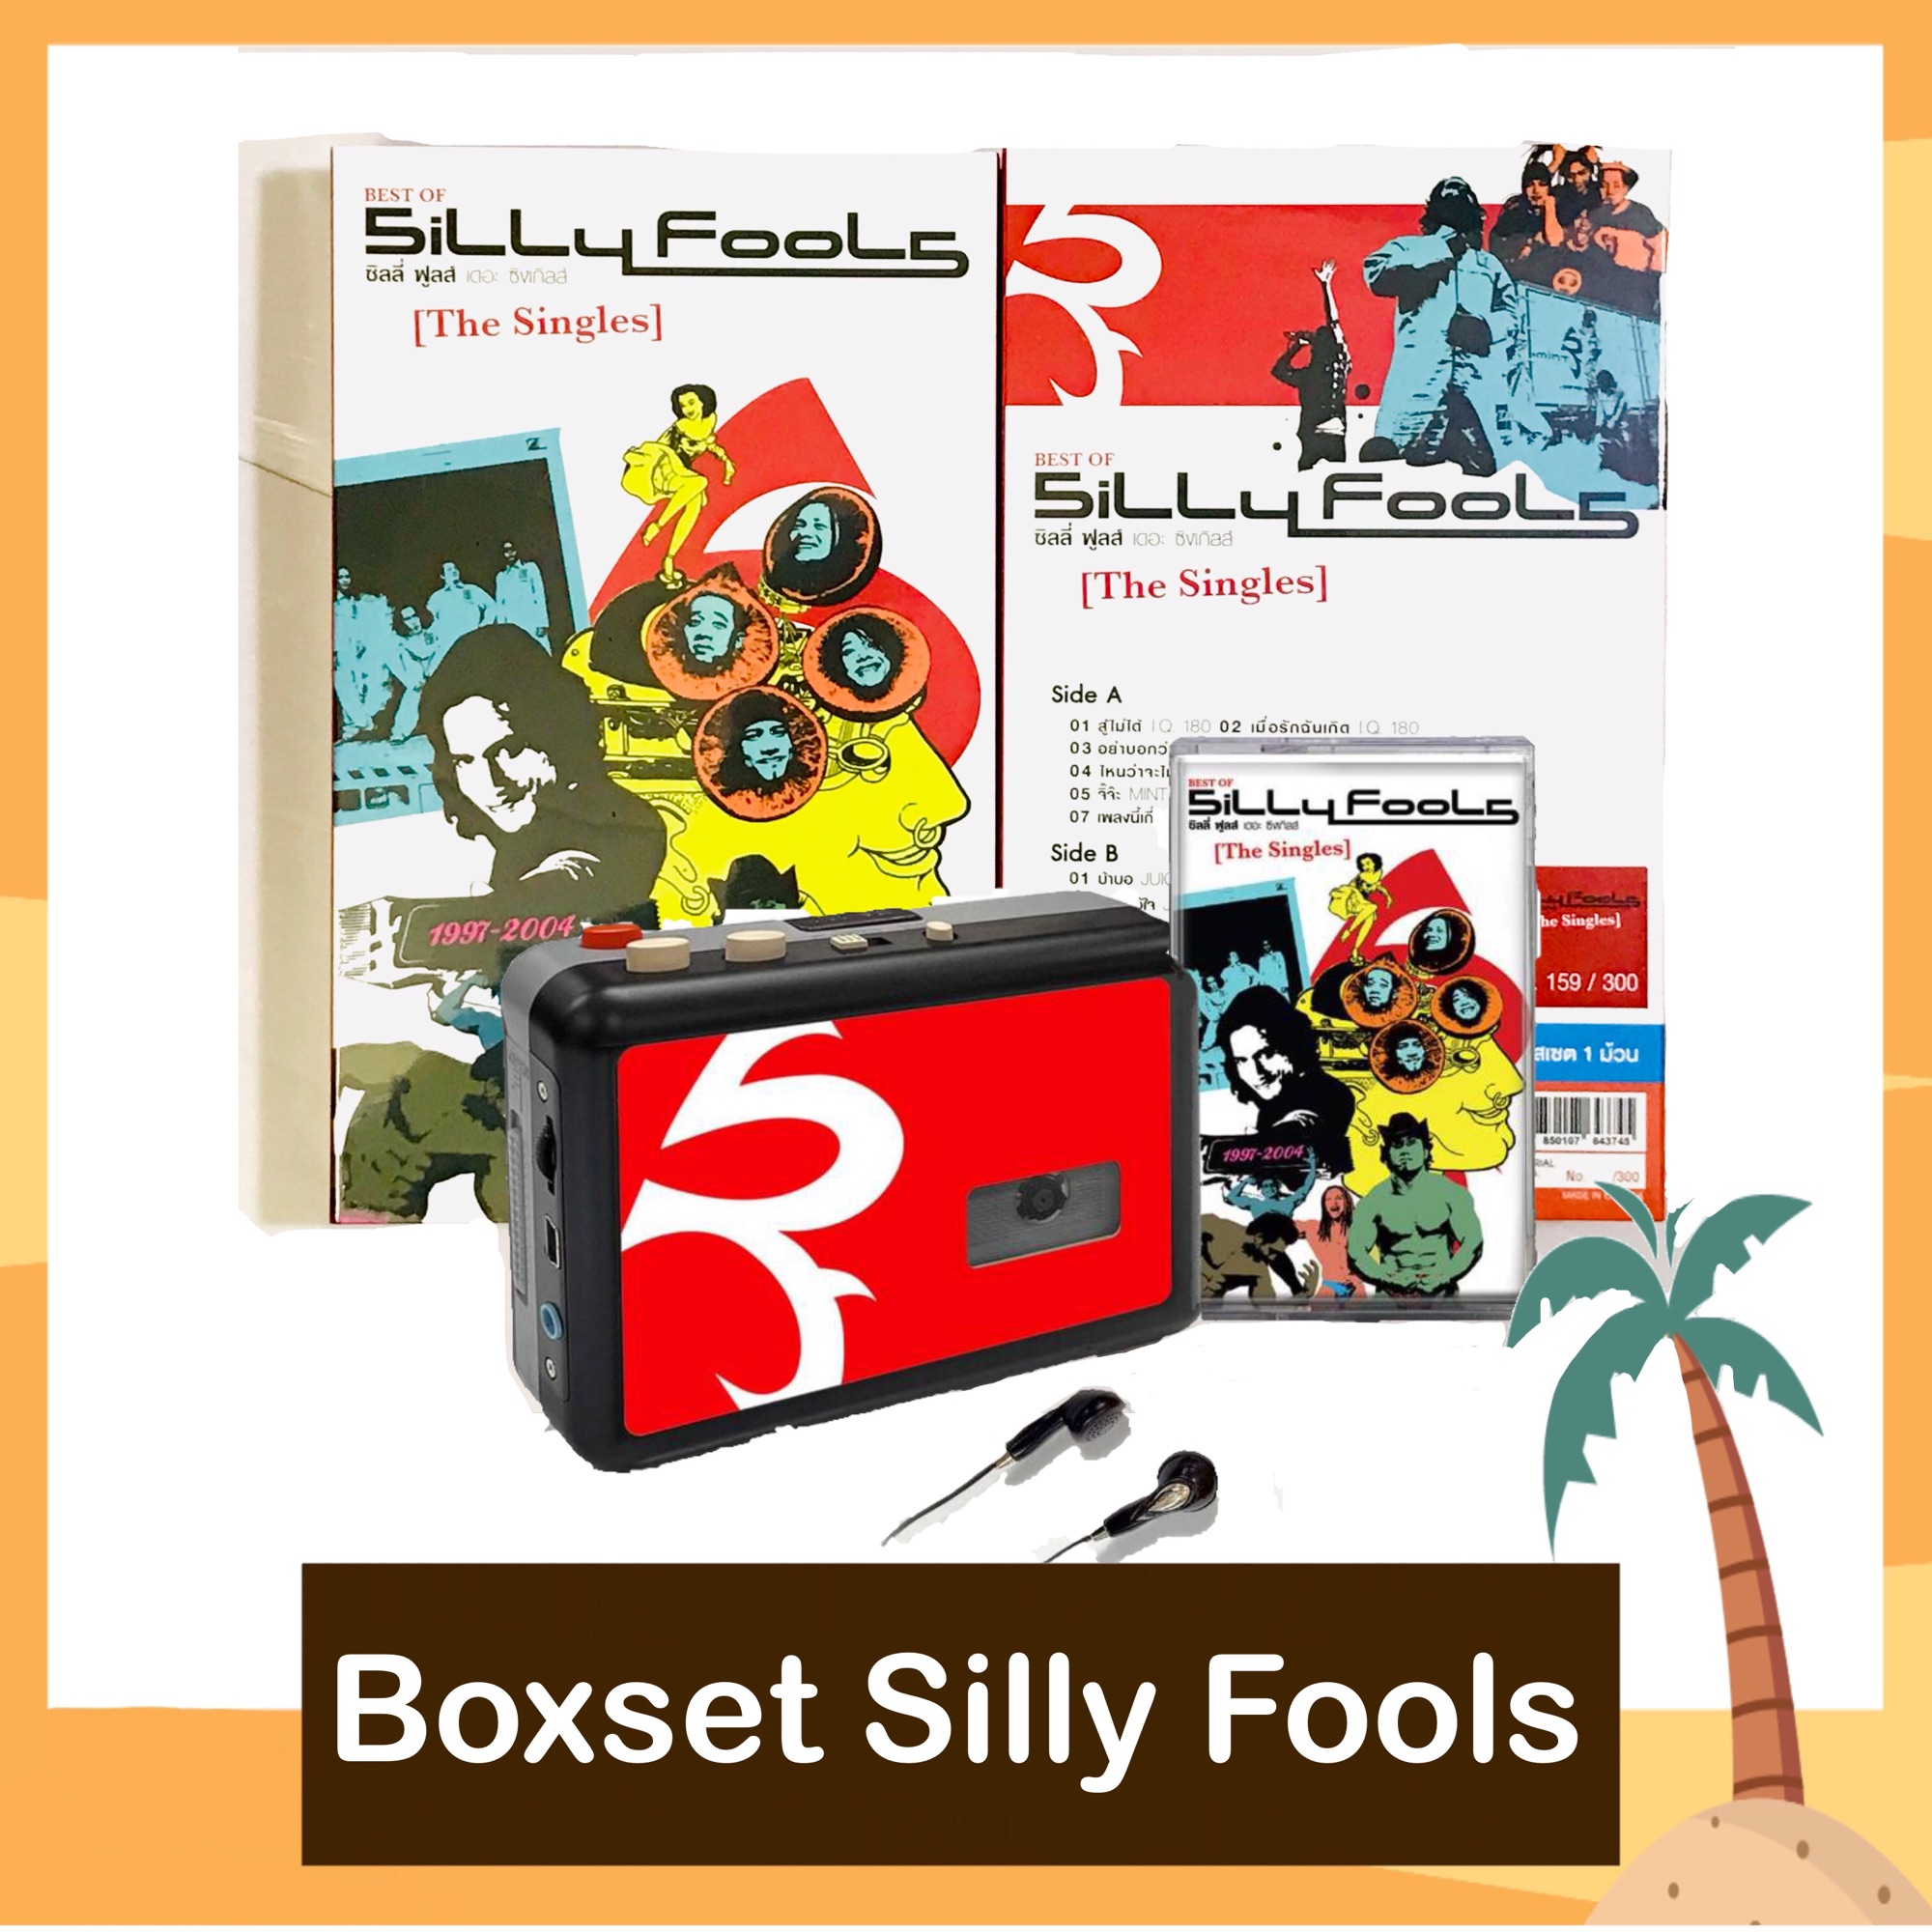 Boxset Cassette Tape Player เครื่องเล่นเทปและเทป Silly Fools อัลบั้ม The Singles มือ 1 ผลิตเพียง 300 ชุด Remastered